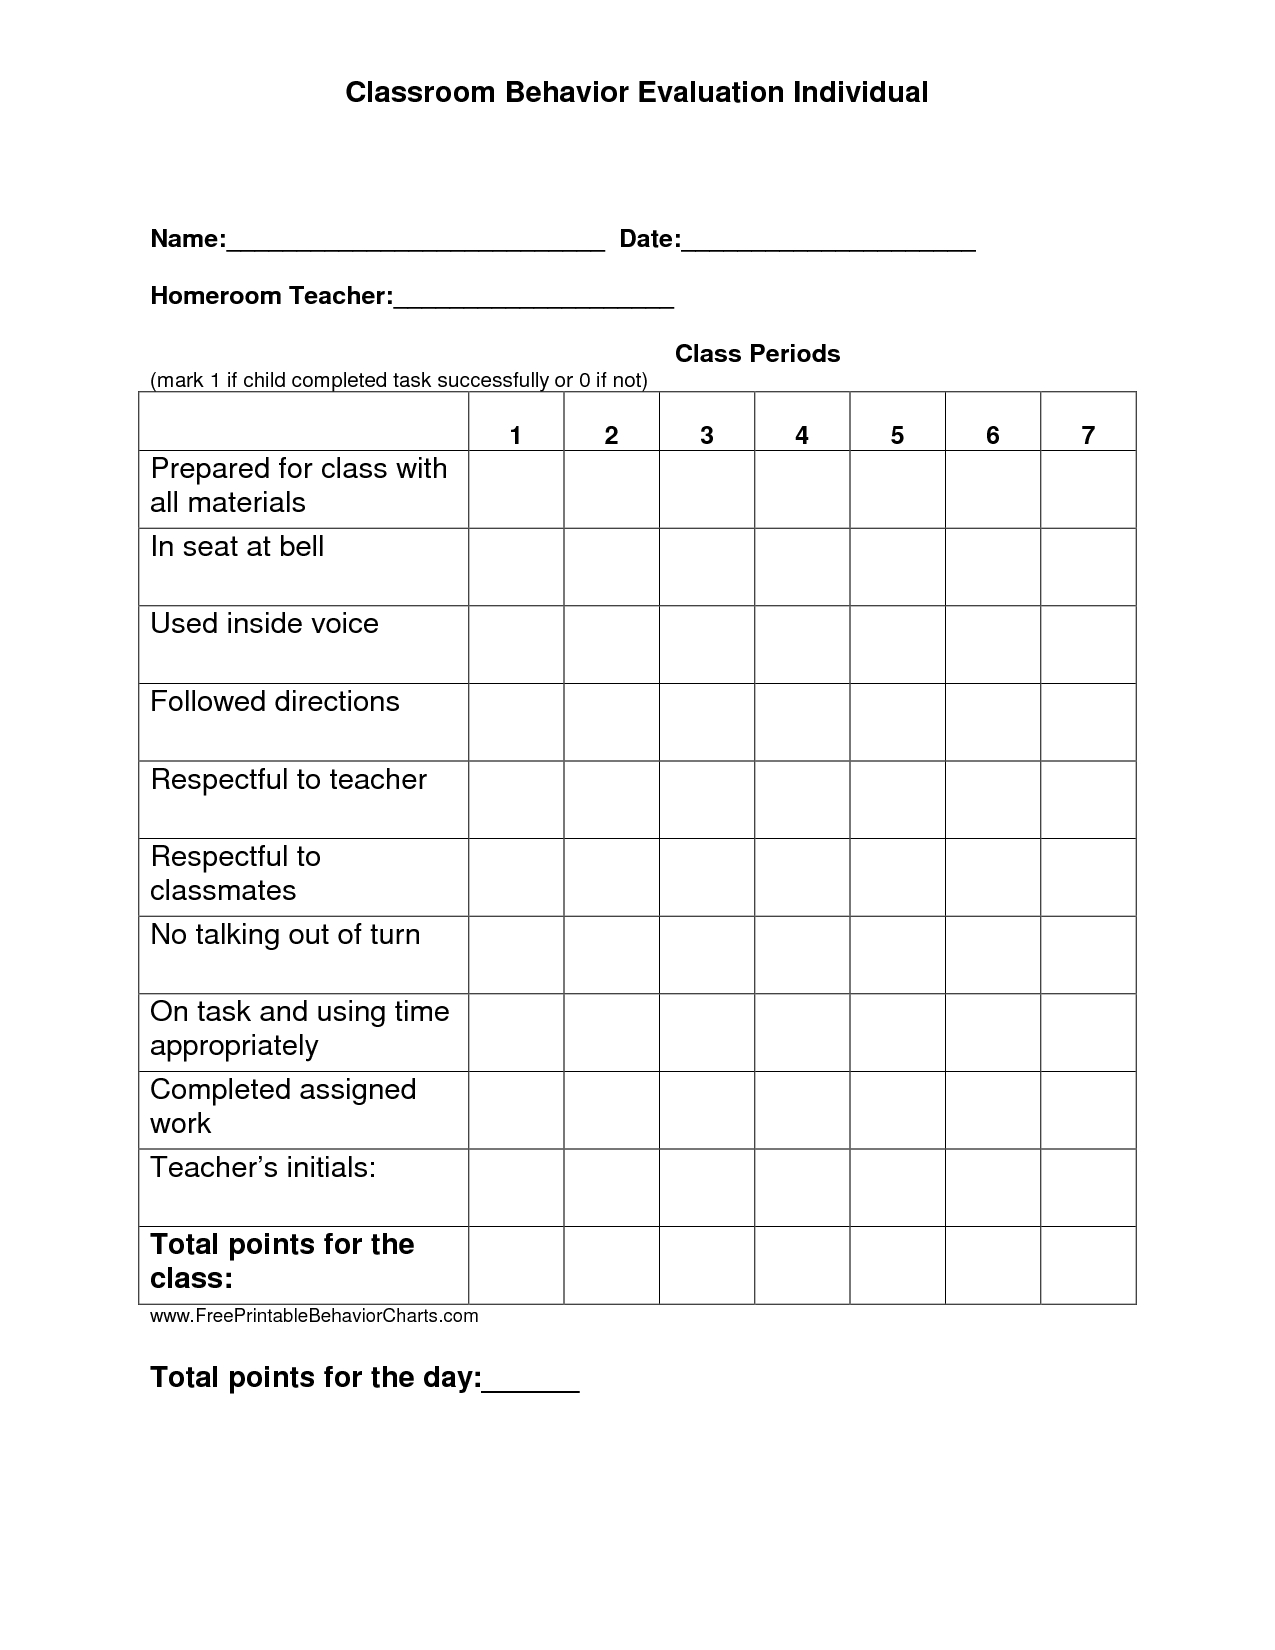 free-printable-behavior-charts-for-elementary-students-free-printable